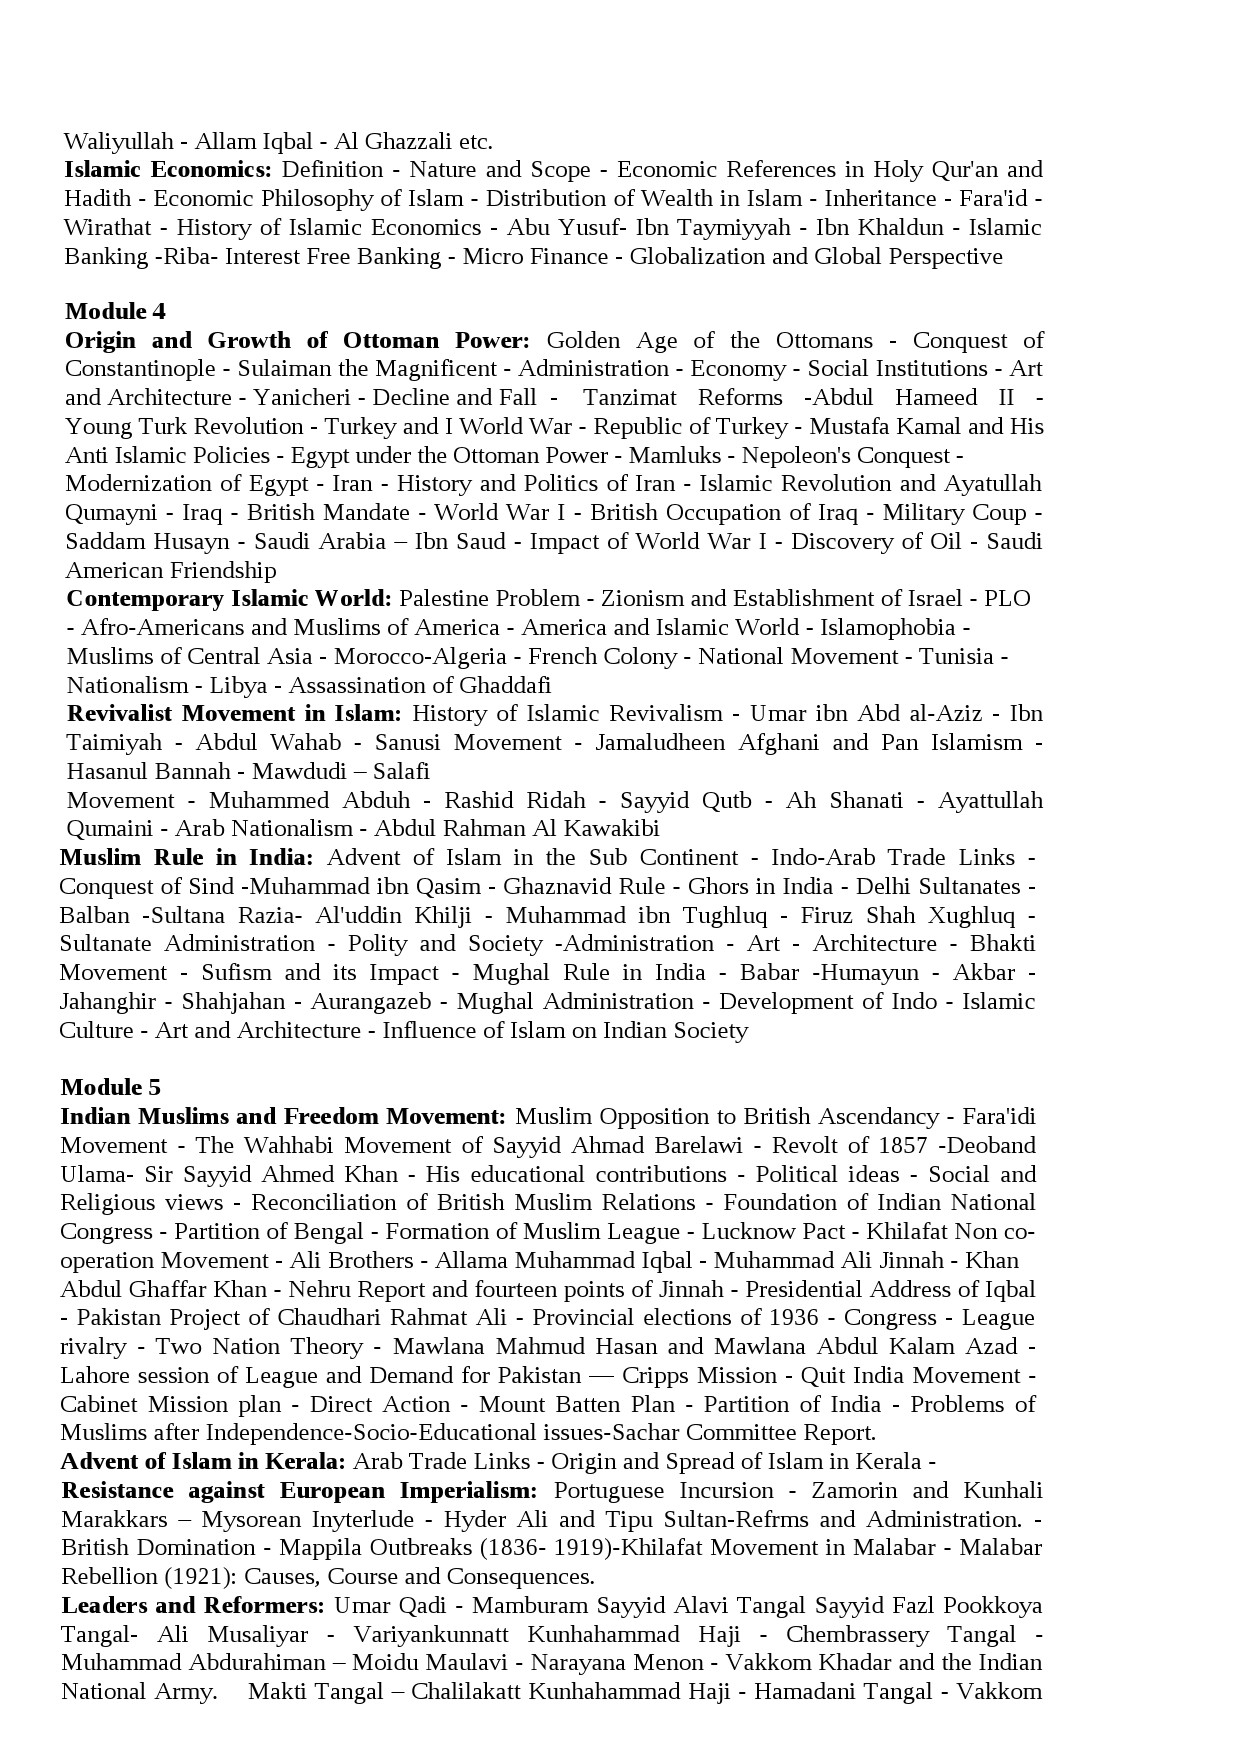 Humanities Syllabus for Kerala PSC 2021 Exam - Notification Image 25